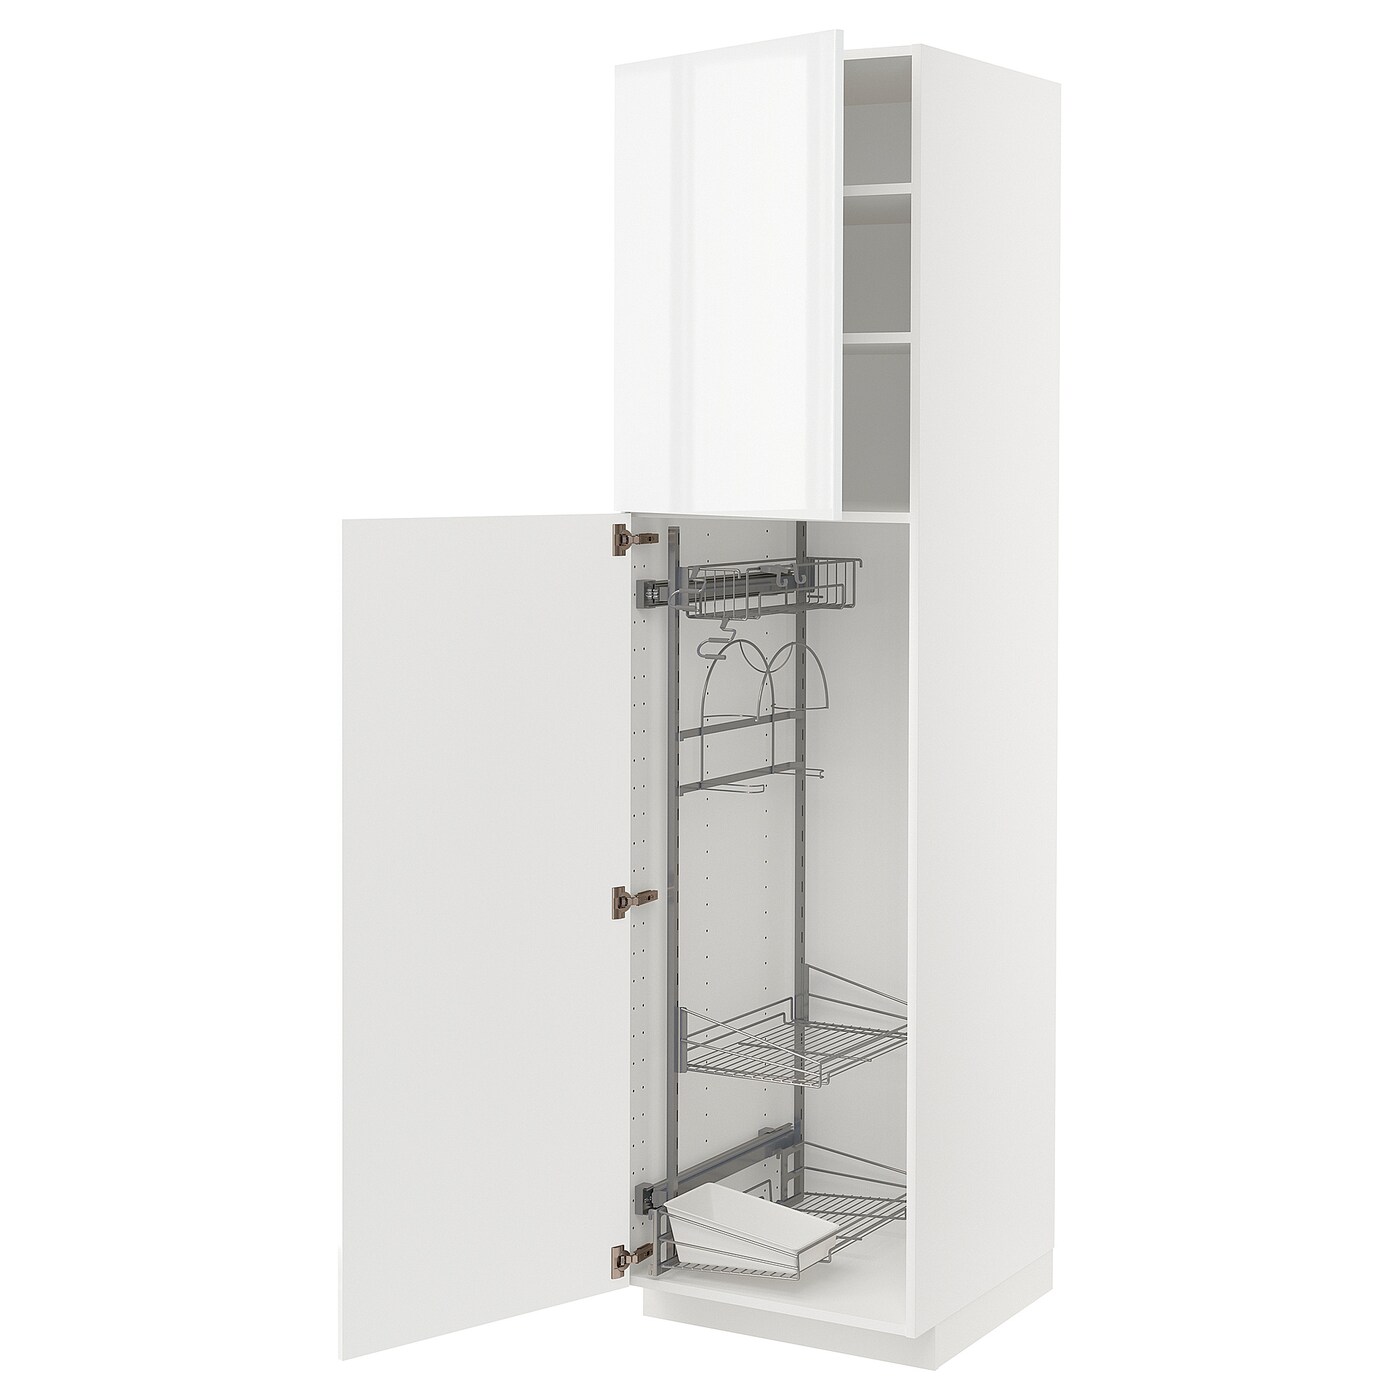 Высокий шкаф/бытовой - IKEA METOD/МЕТОД ИКЕА, 220х60х60 см, белый/светло-серый глянцевый